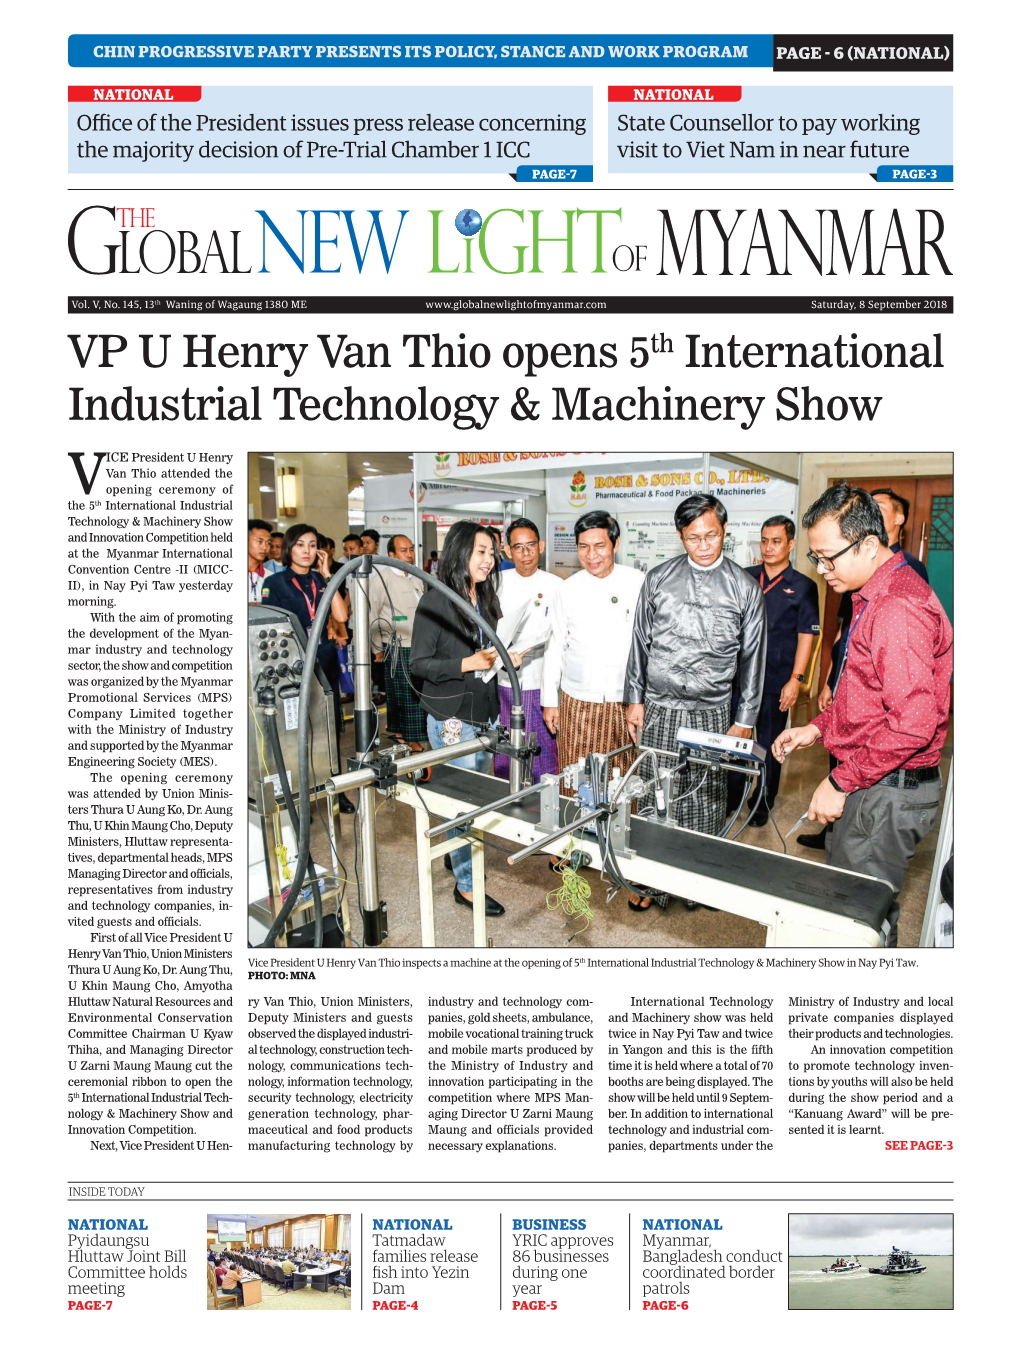 VP U Henry Van Thio Opens 5Th International Industrial Technology & Machinery Show